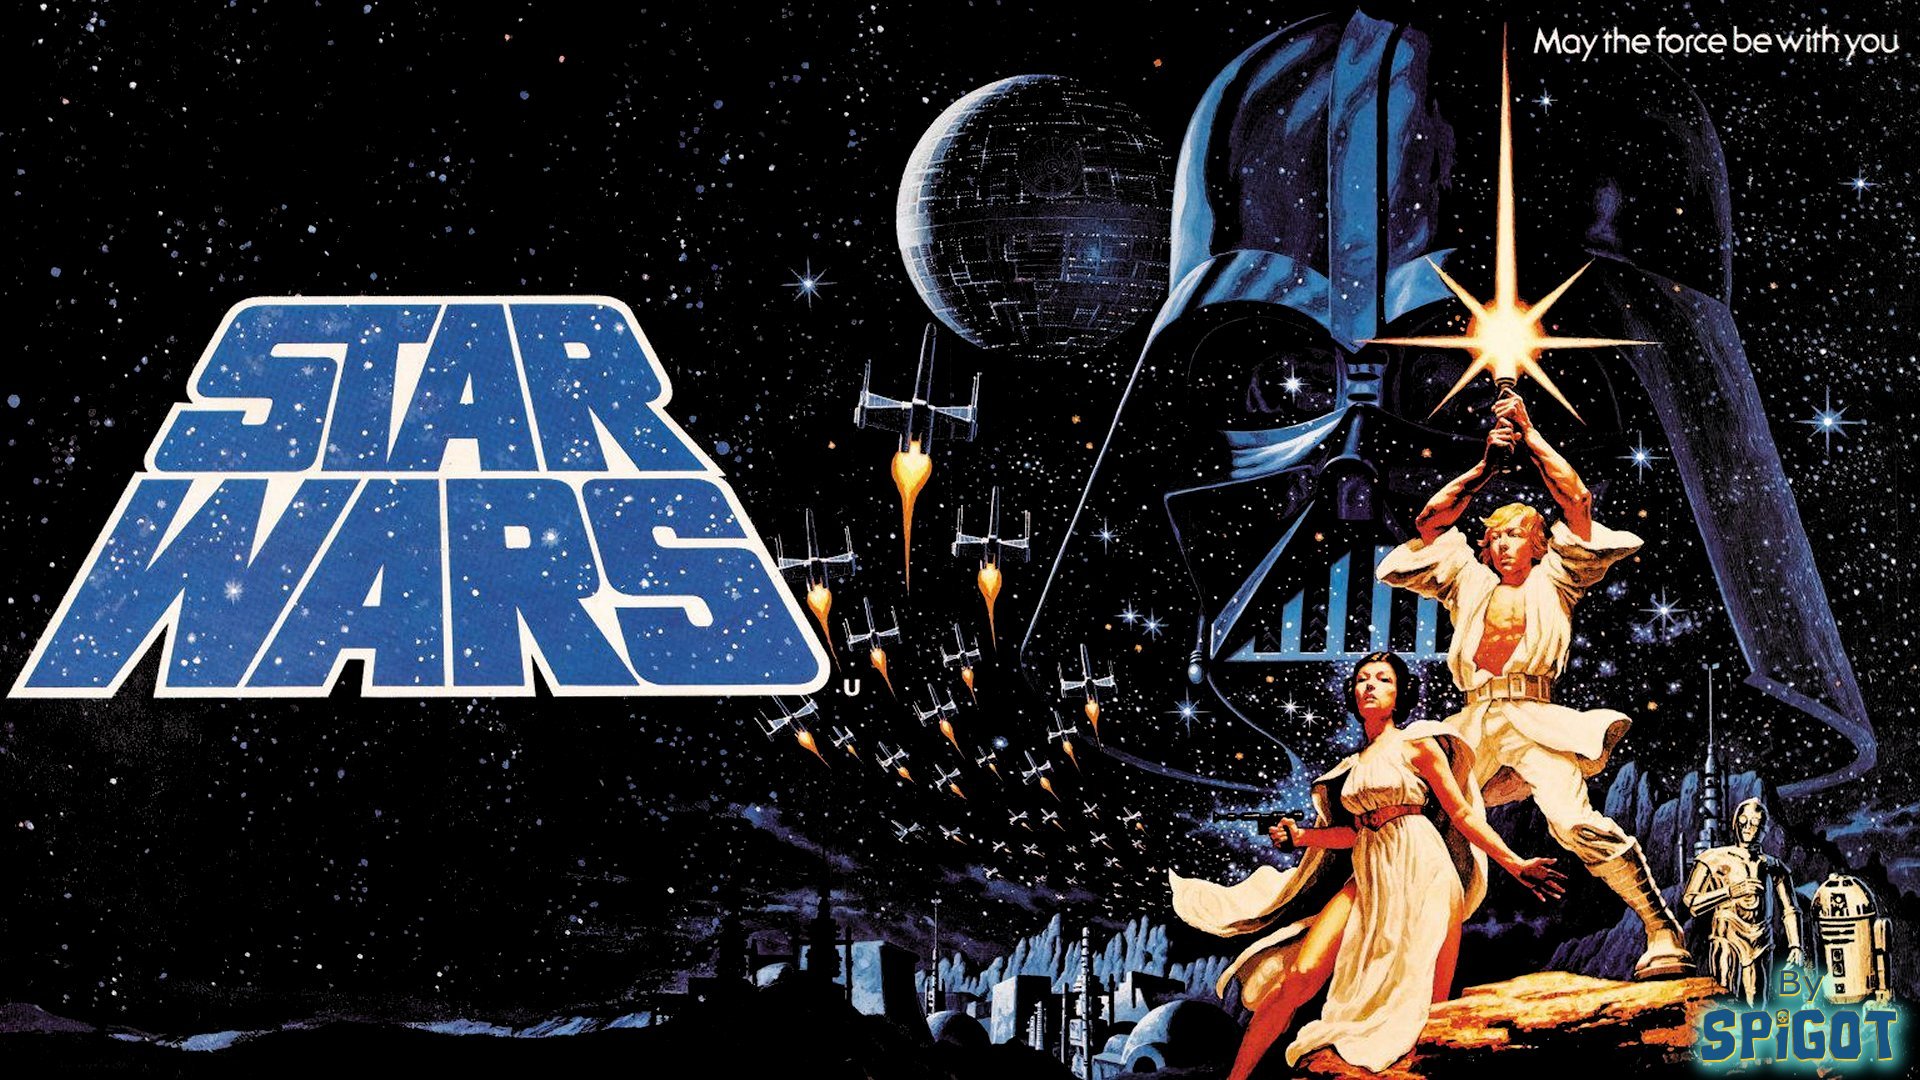 Star Wars Wallpaper Image Starwars Sci Fi Pictures Scifi